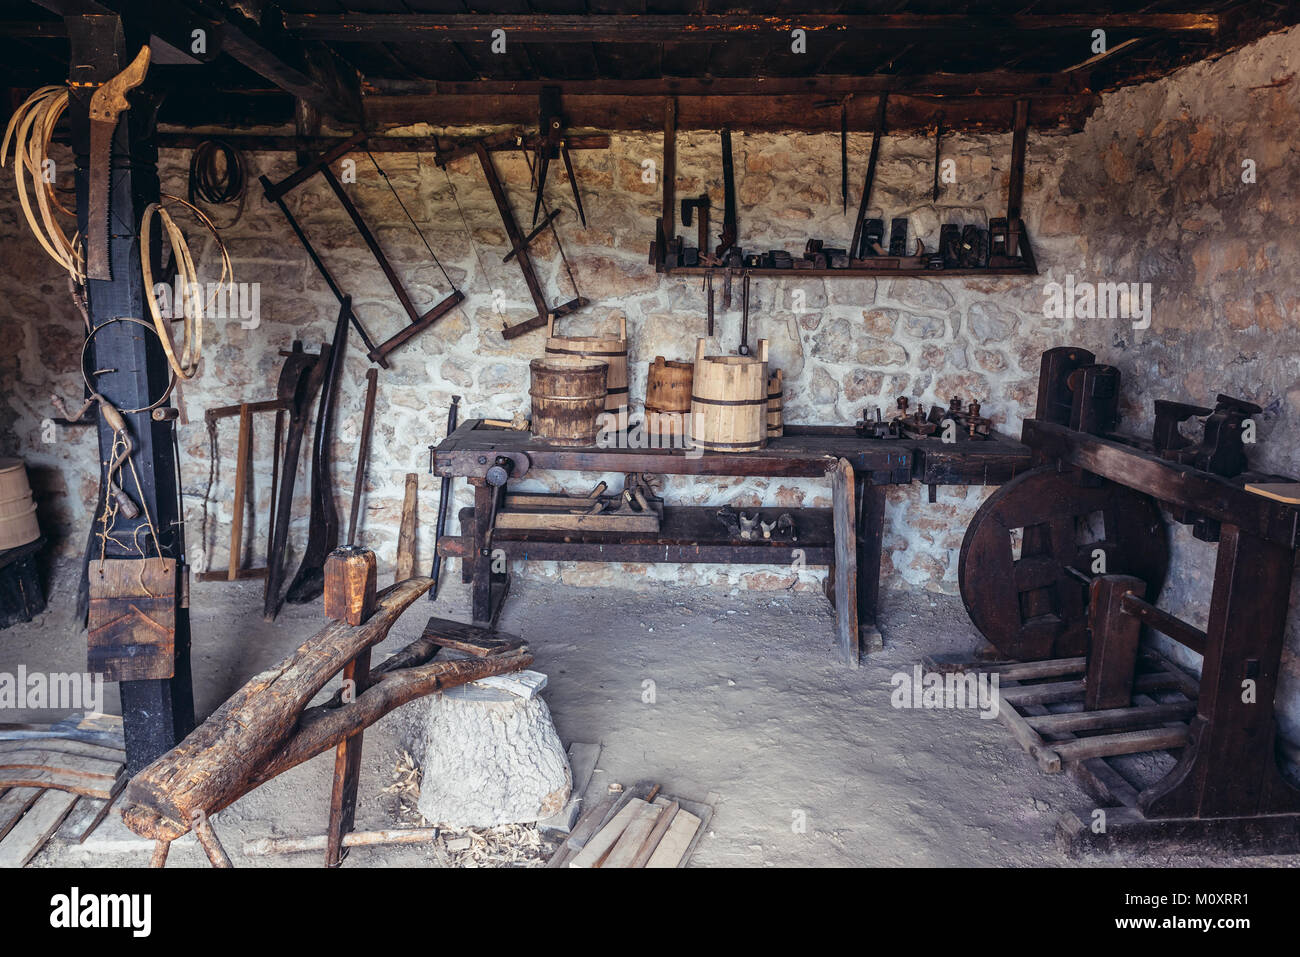 Cooper's workshop in Ethnographic heritage park called Old Village Museum in Sirogojno village, Zlatibor region in western part of Serbia Stock Photo